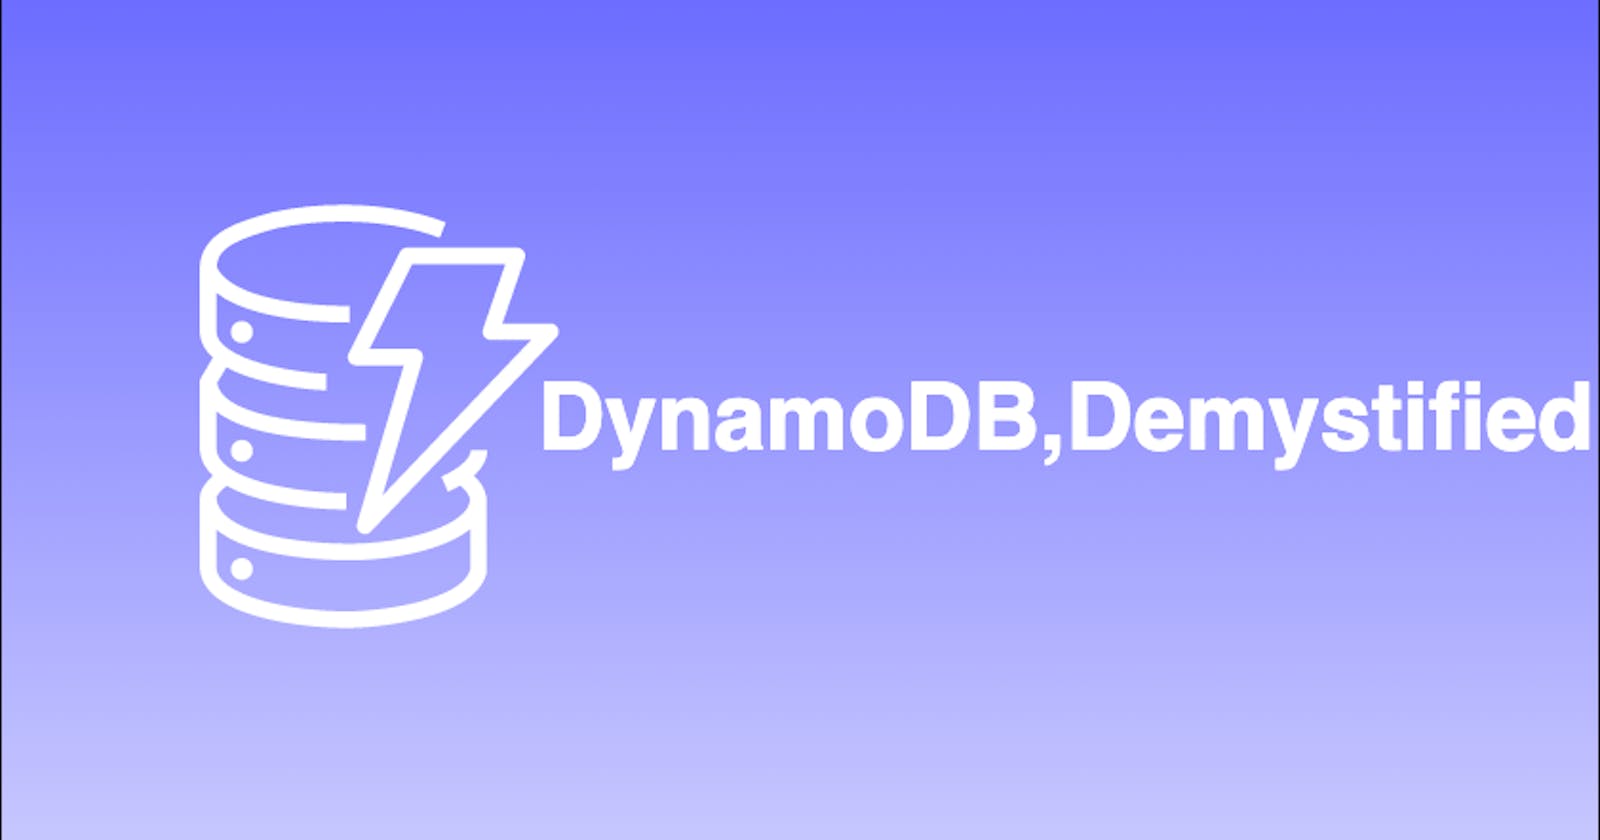 DynamoDb,Demistyfied.
(Chapter 1)